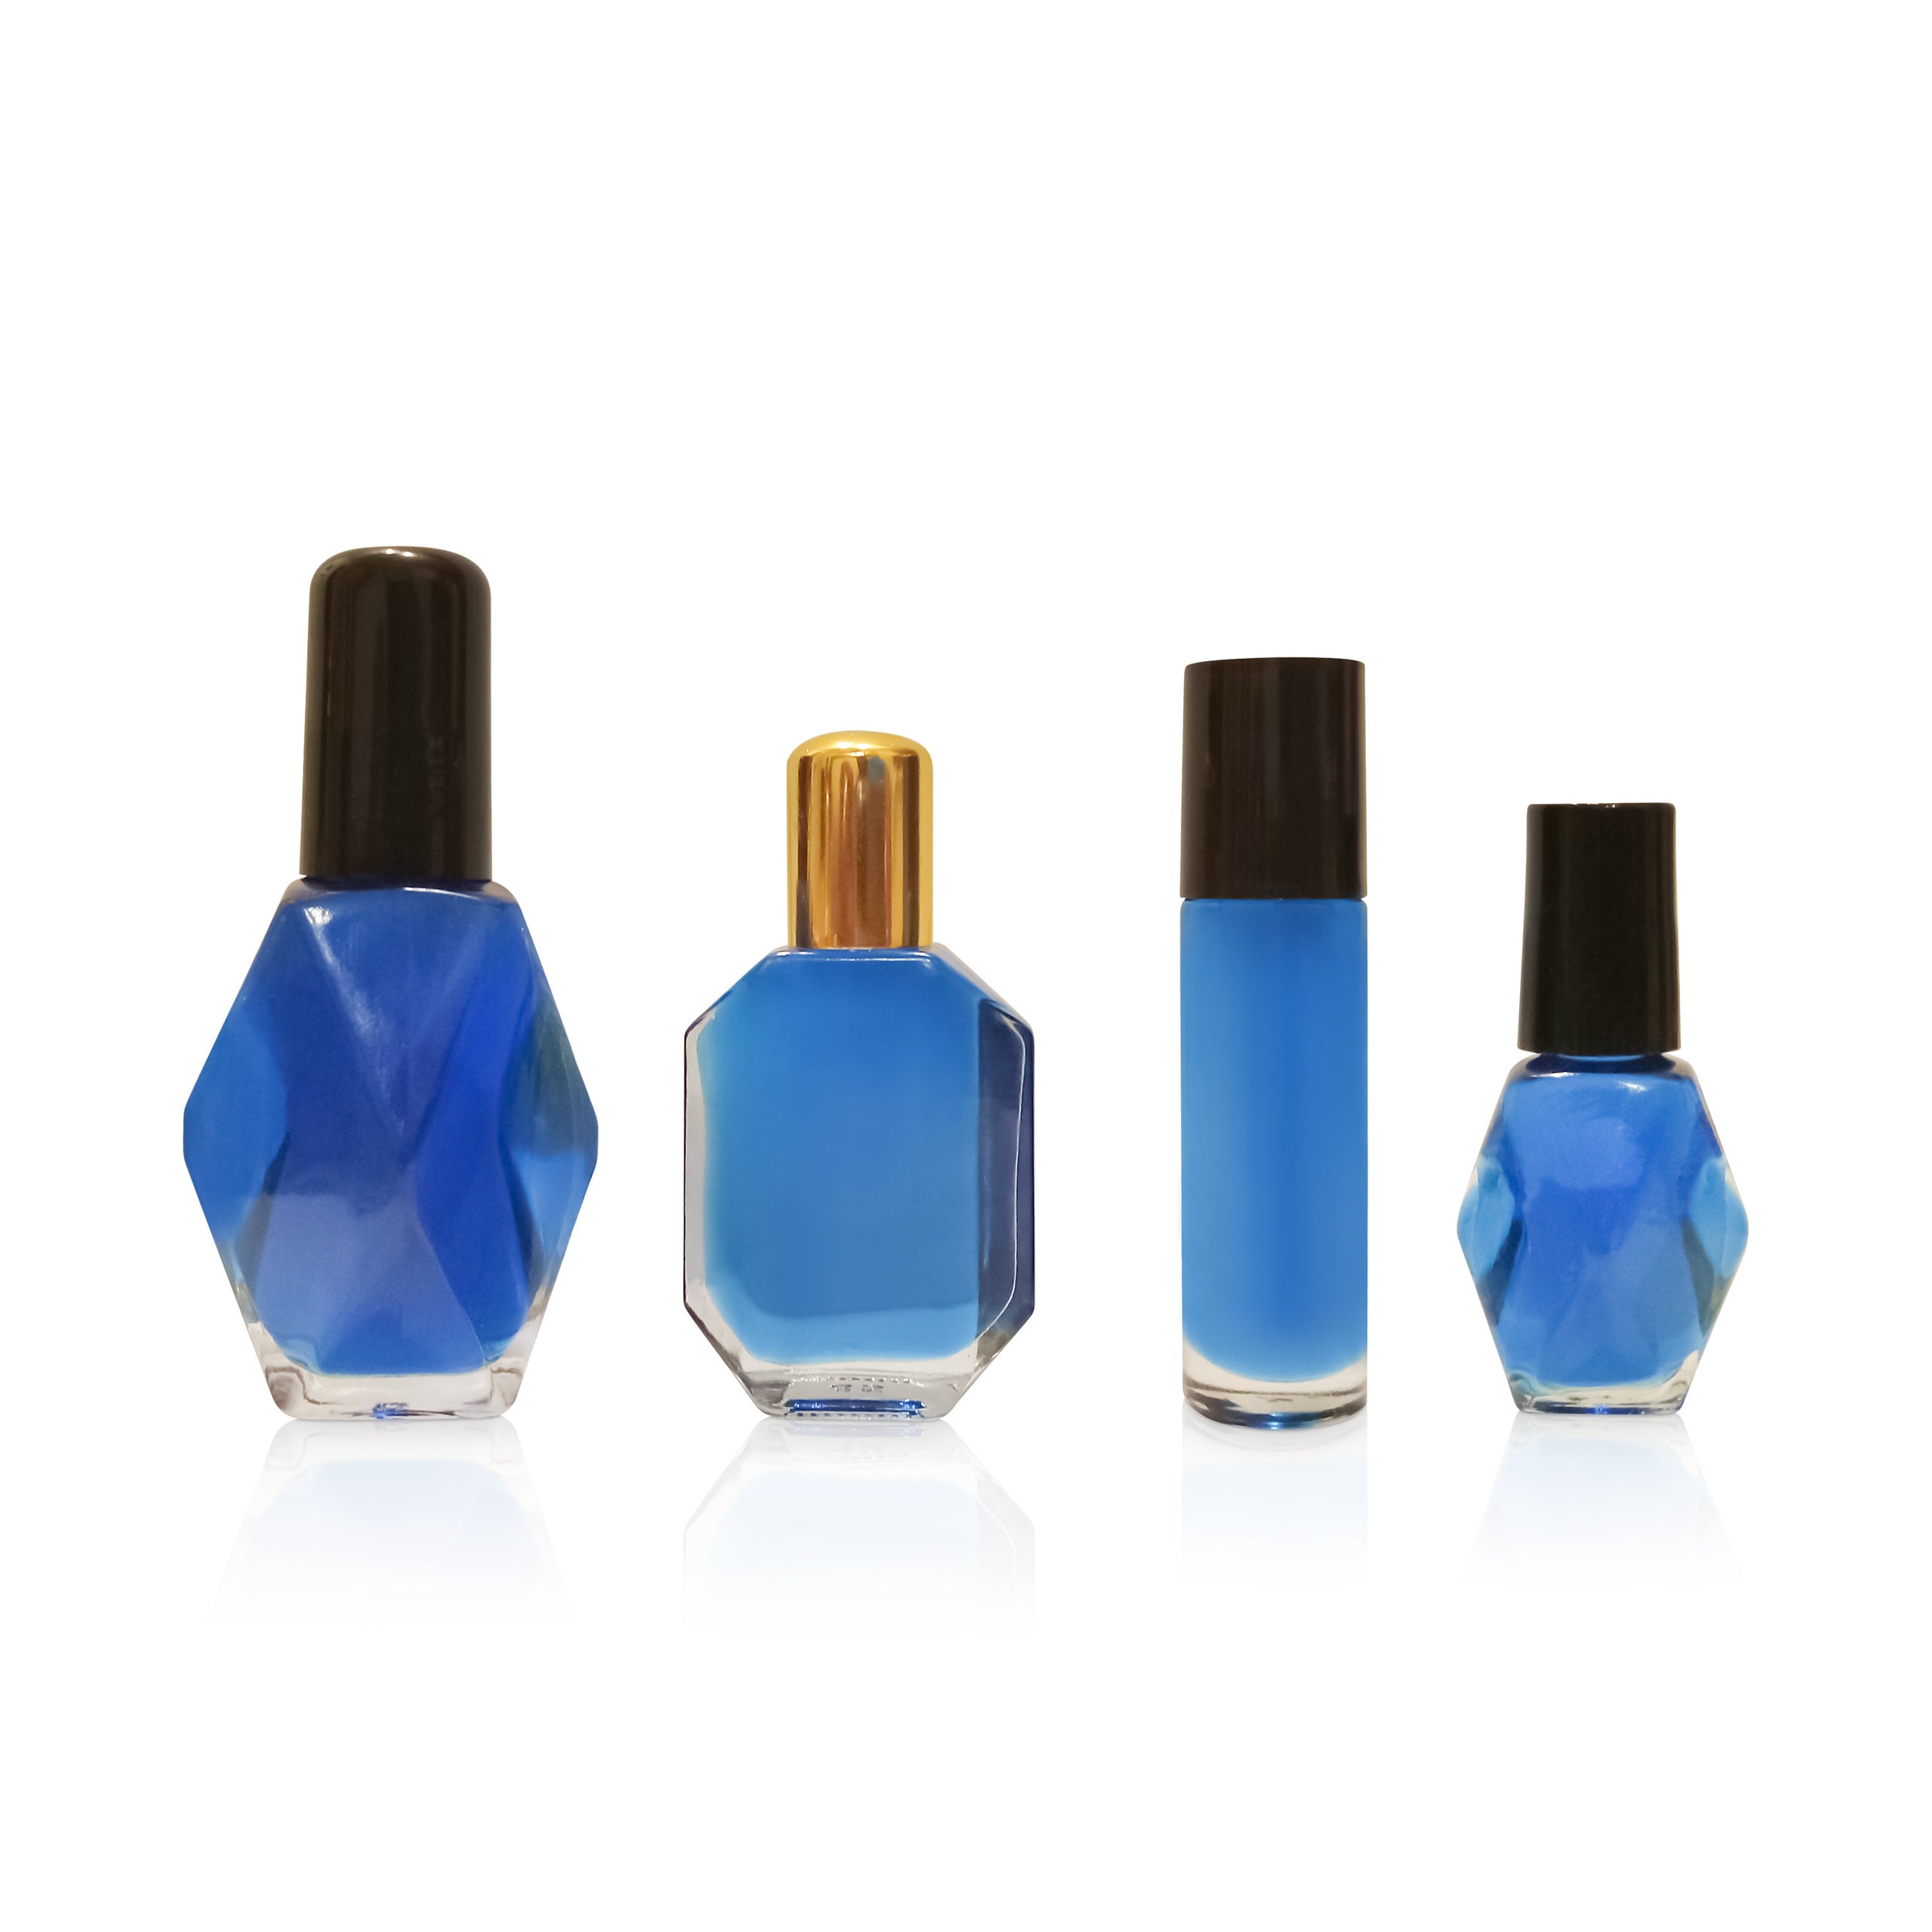 Louis Vuitton - Afternoon Swim - Oil Perfumery